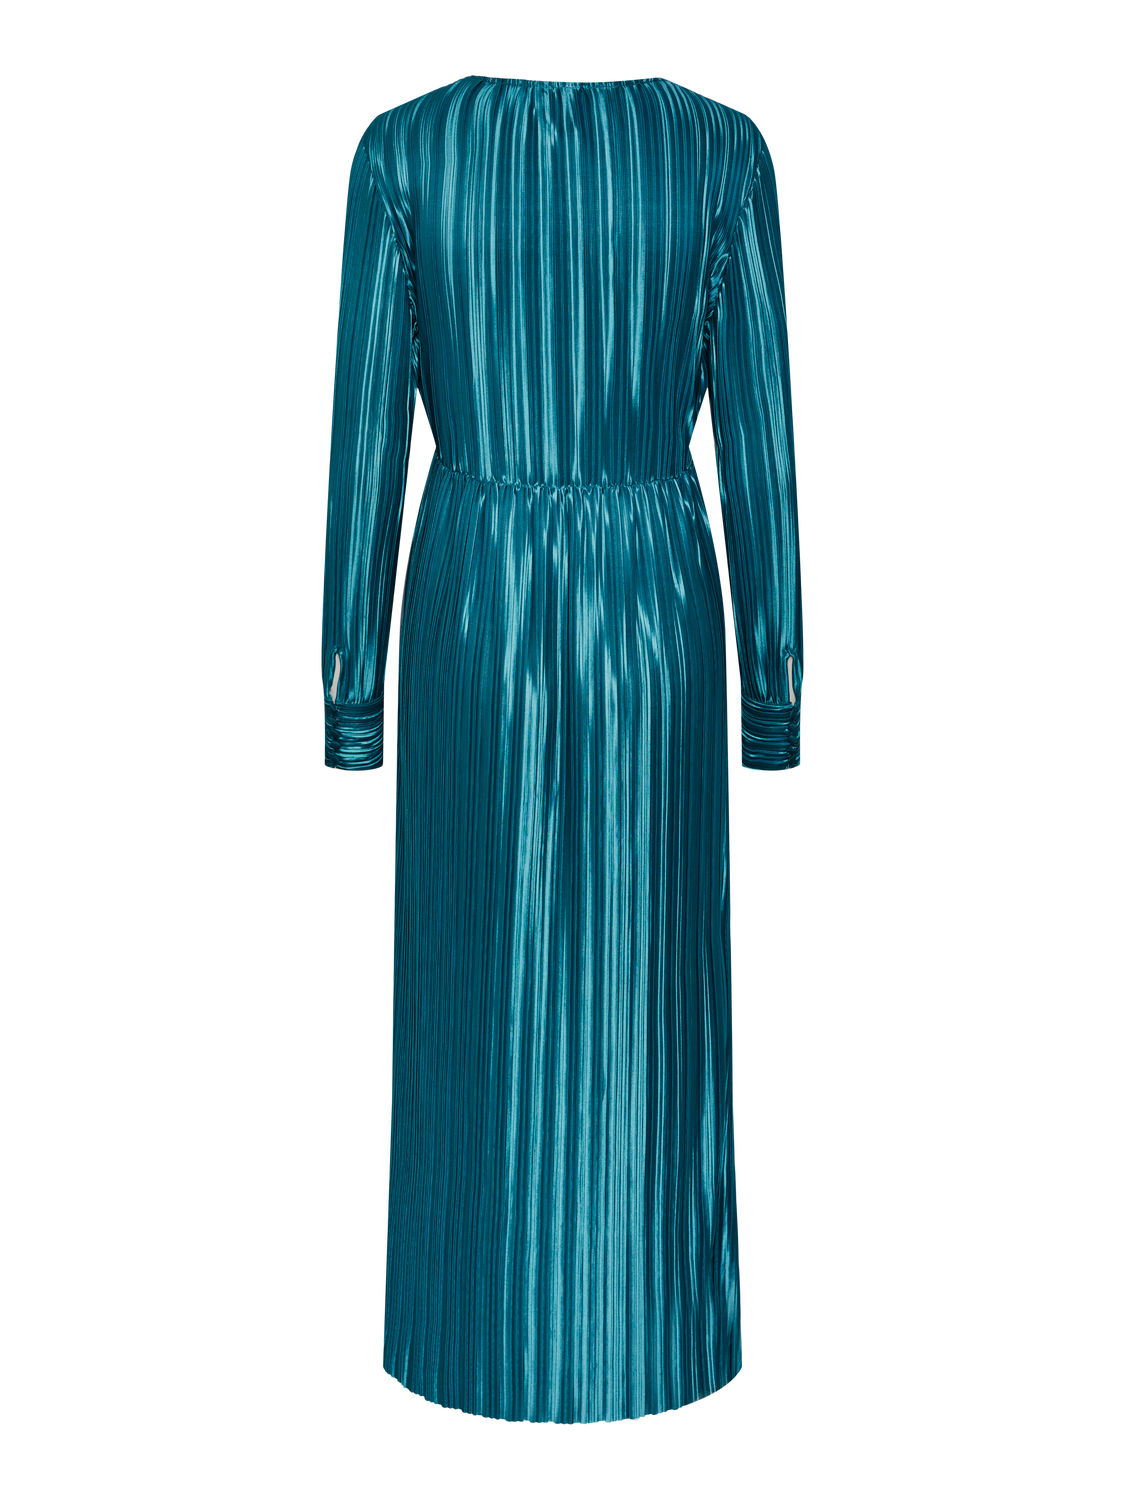 YASSTORMA Dress - Storm Blue